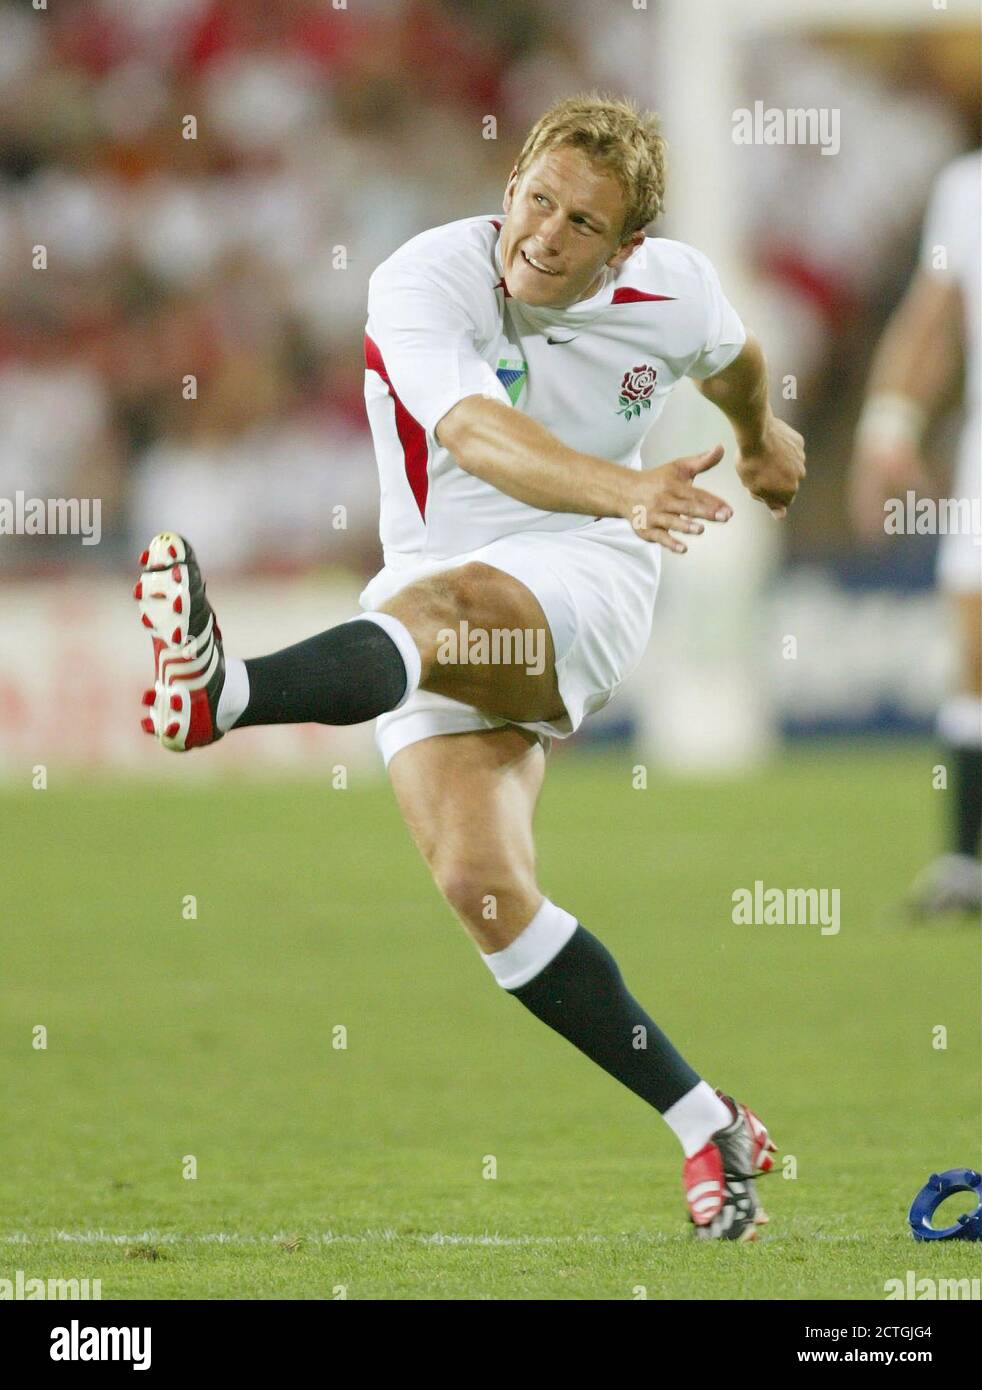 JONNY WILKINSON. ENGLAND v AUSTRALIA. RUGBY WORLD CUP FINAL, SYDNEY 2003  PICTURE CREDIT : © MARK PAIN / ALAMY STOCK PHOTO Stock Photo